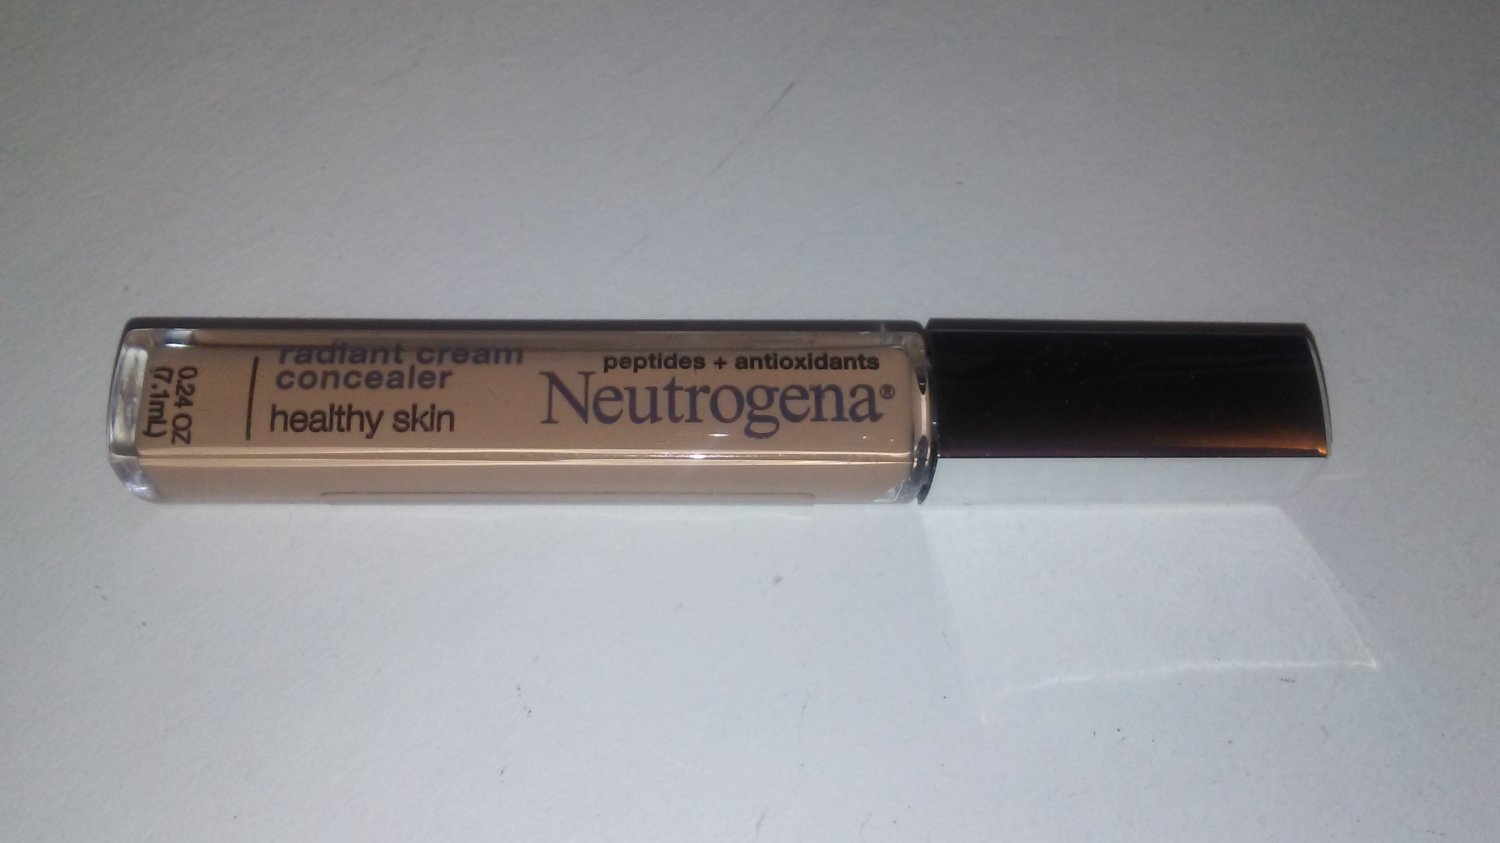 Neutrogena Radiant Cream Concealer CASHEW LIGHT MED 03